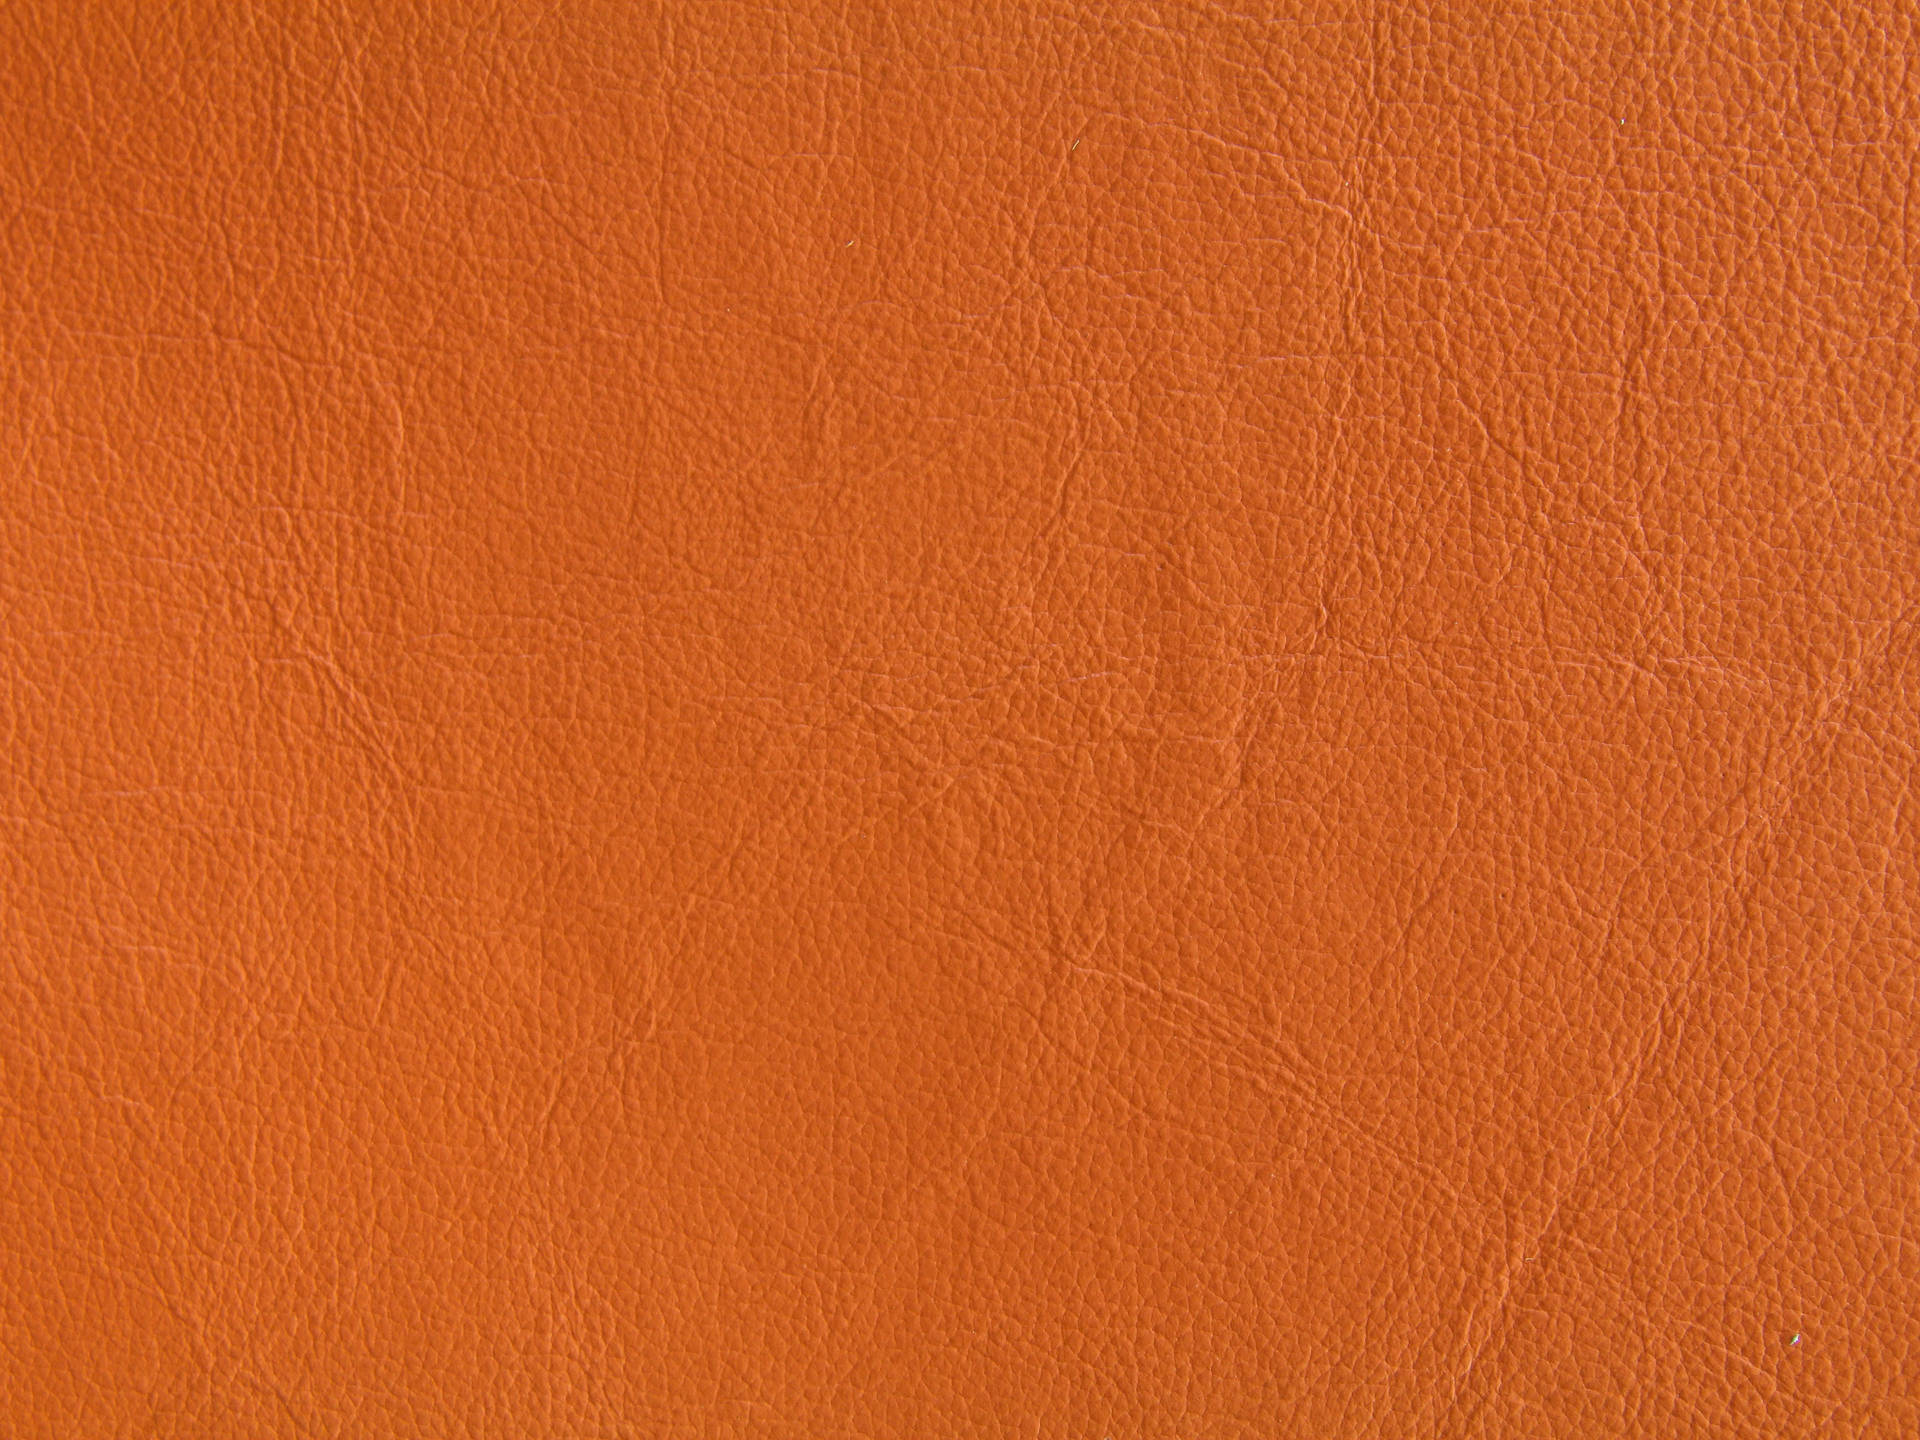 Wall In Orange Tan Aesthetic Background